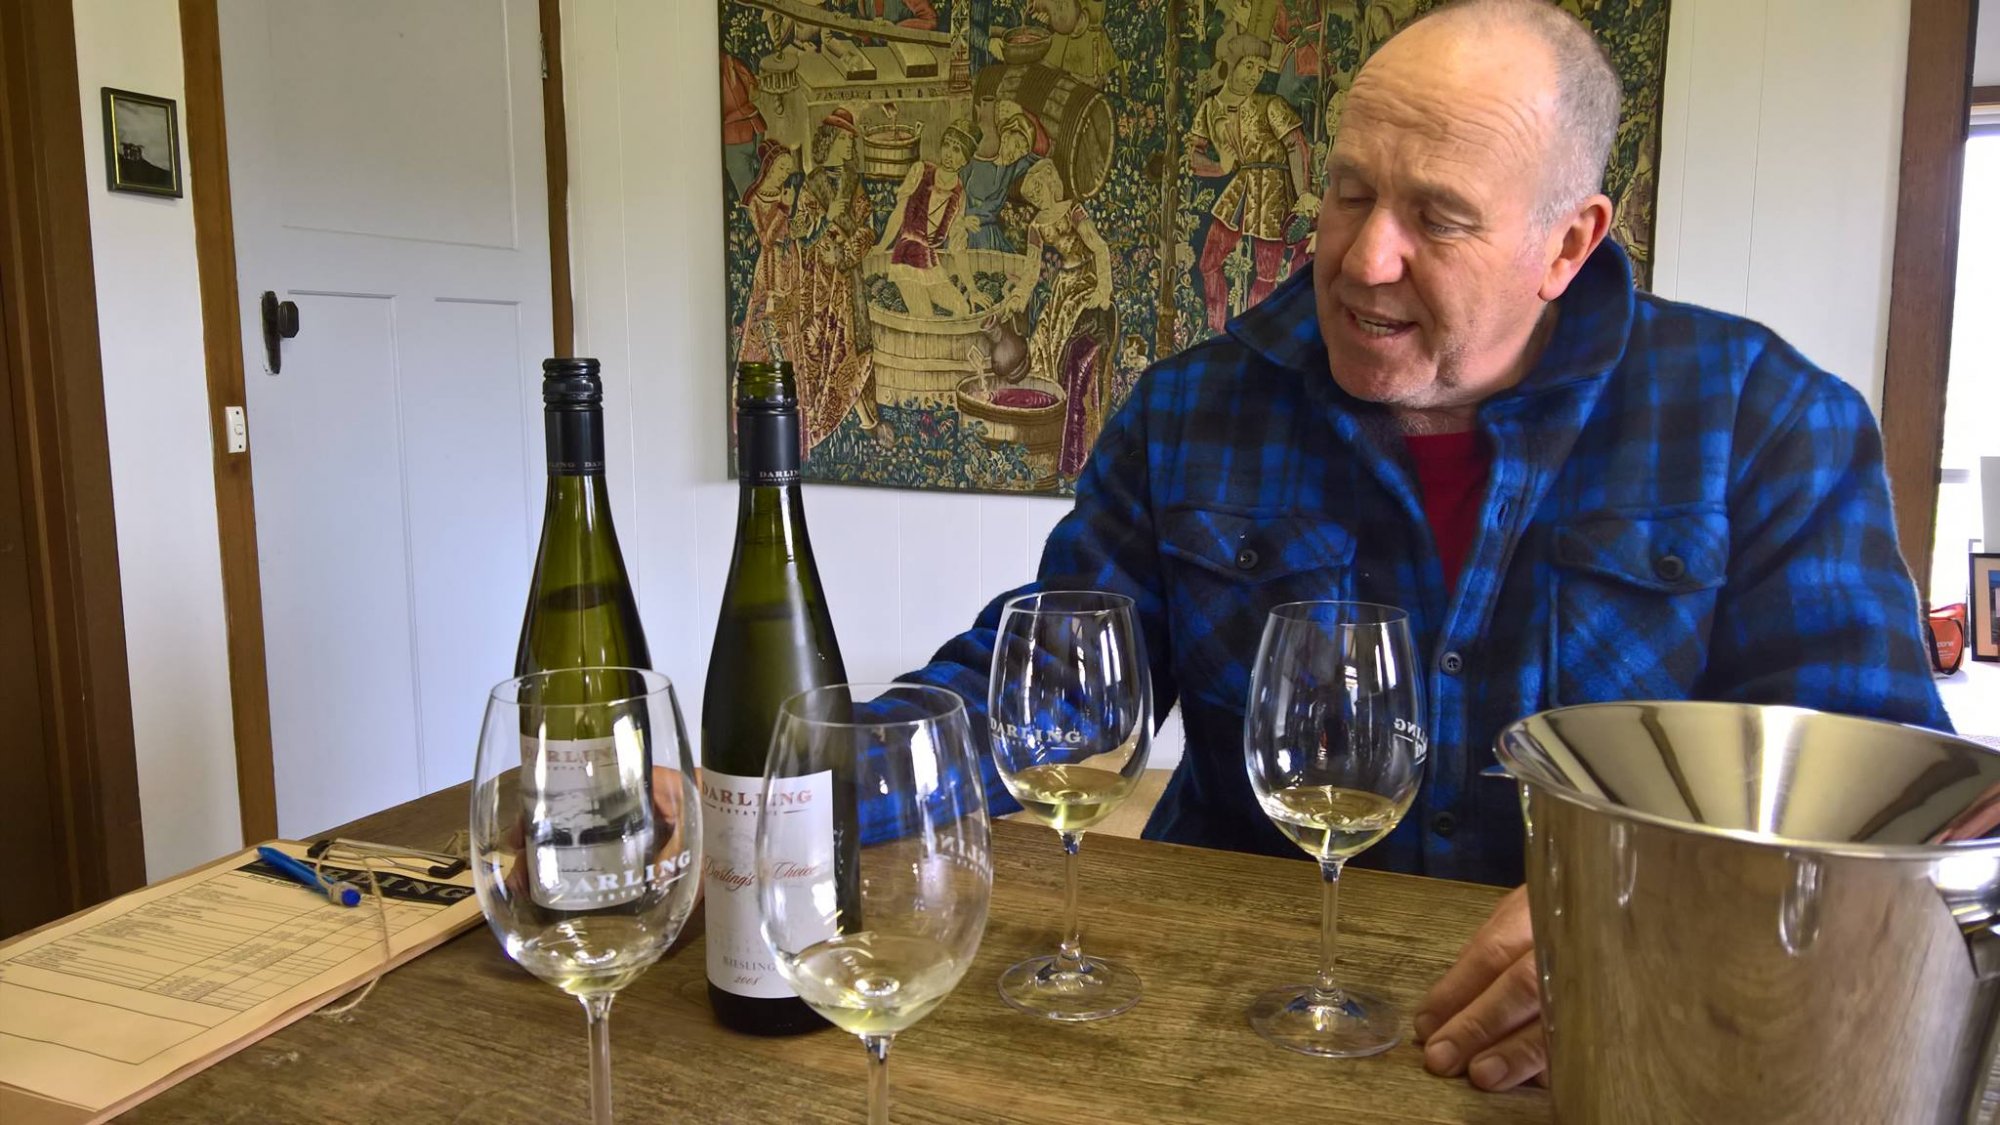 Tasting wines and chatting with John Darling at Darling Estate